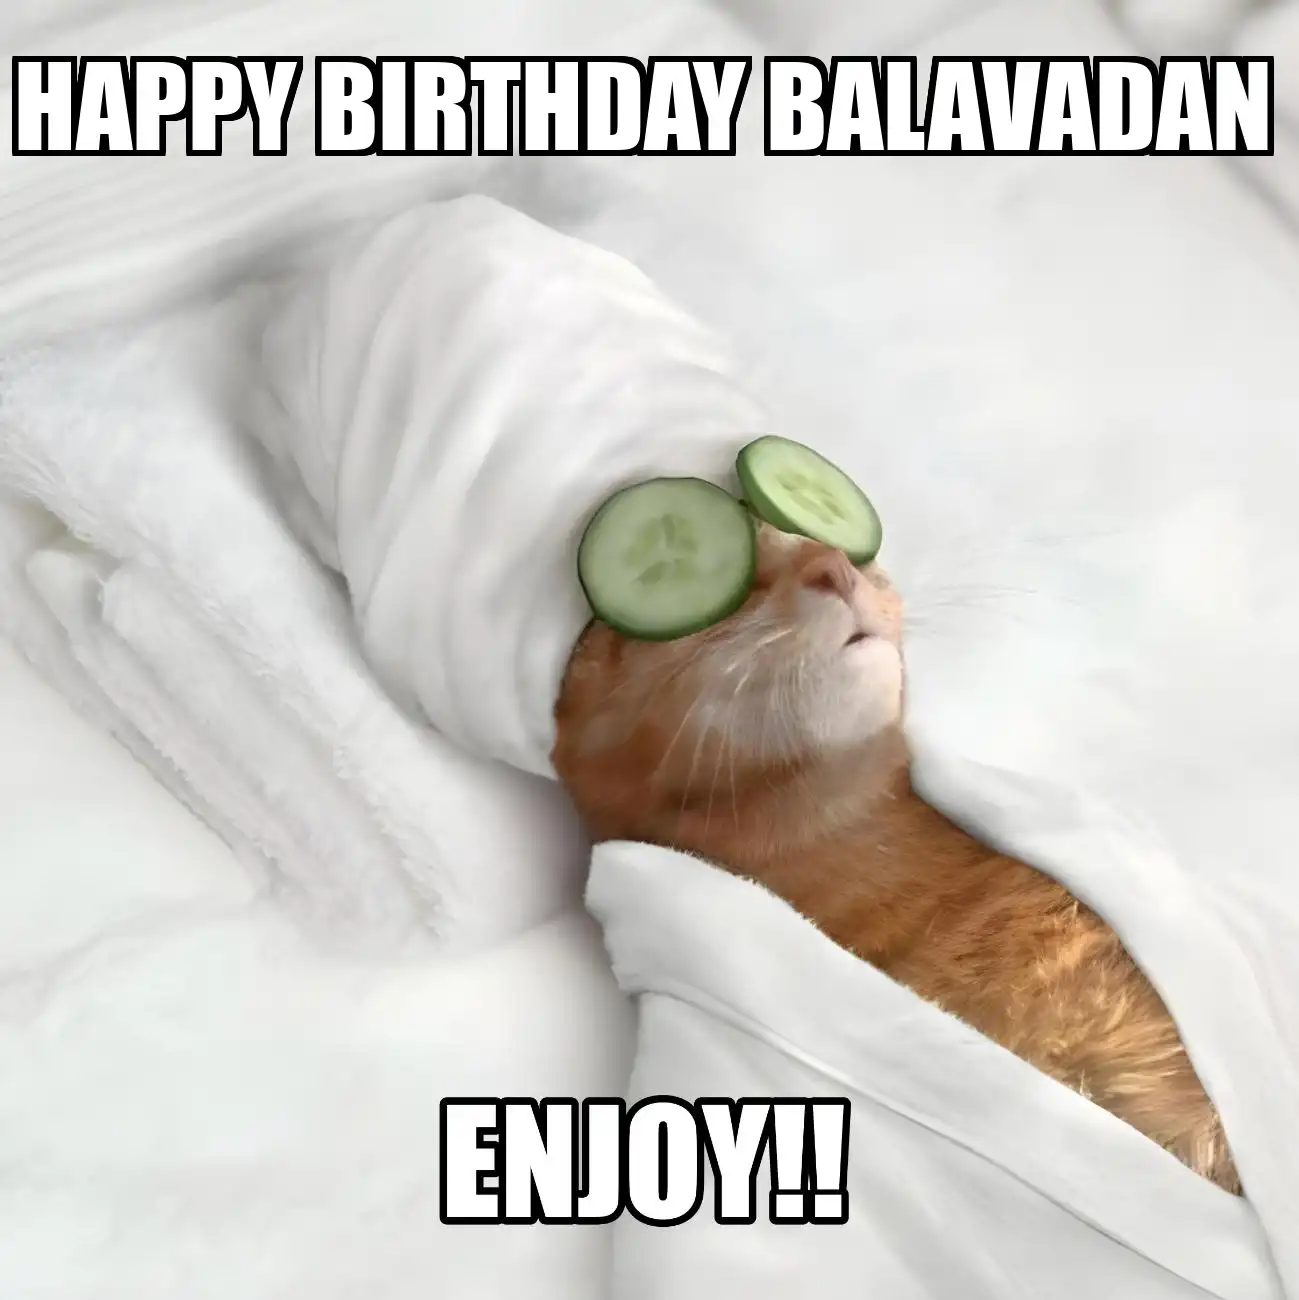 Happy Birthday Balavadan Enjoy Cat Meme